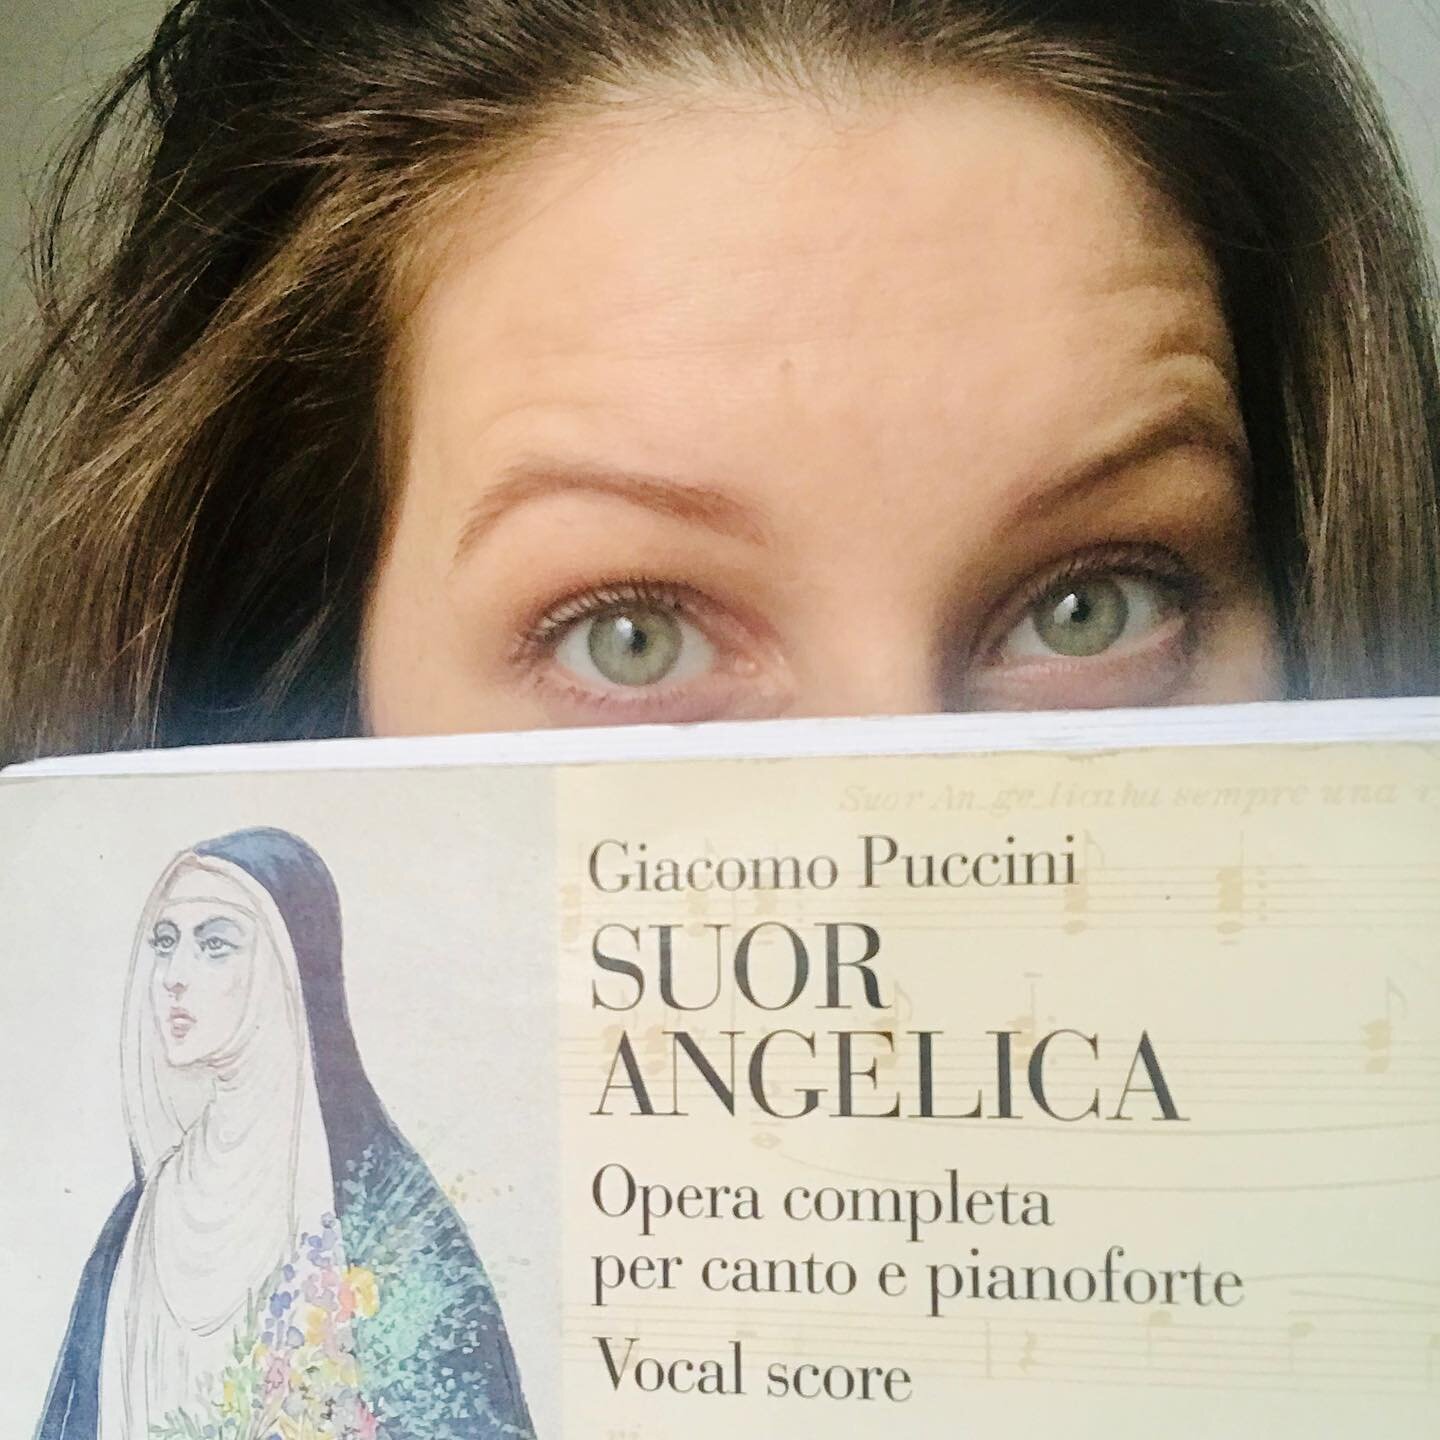 Next adventure...
.
.
.
#Puccini #SuorAngelica #OperaSinger #SingerLife #OperaLife #Opera #Mezzo #Instaopera #Adventure